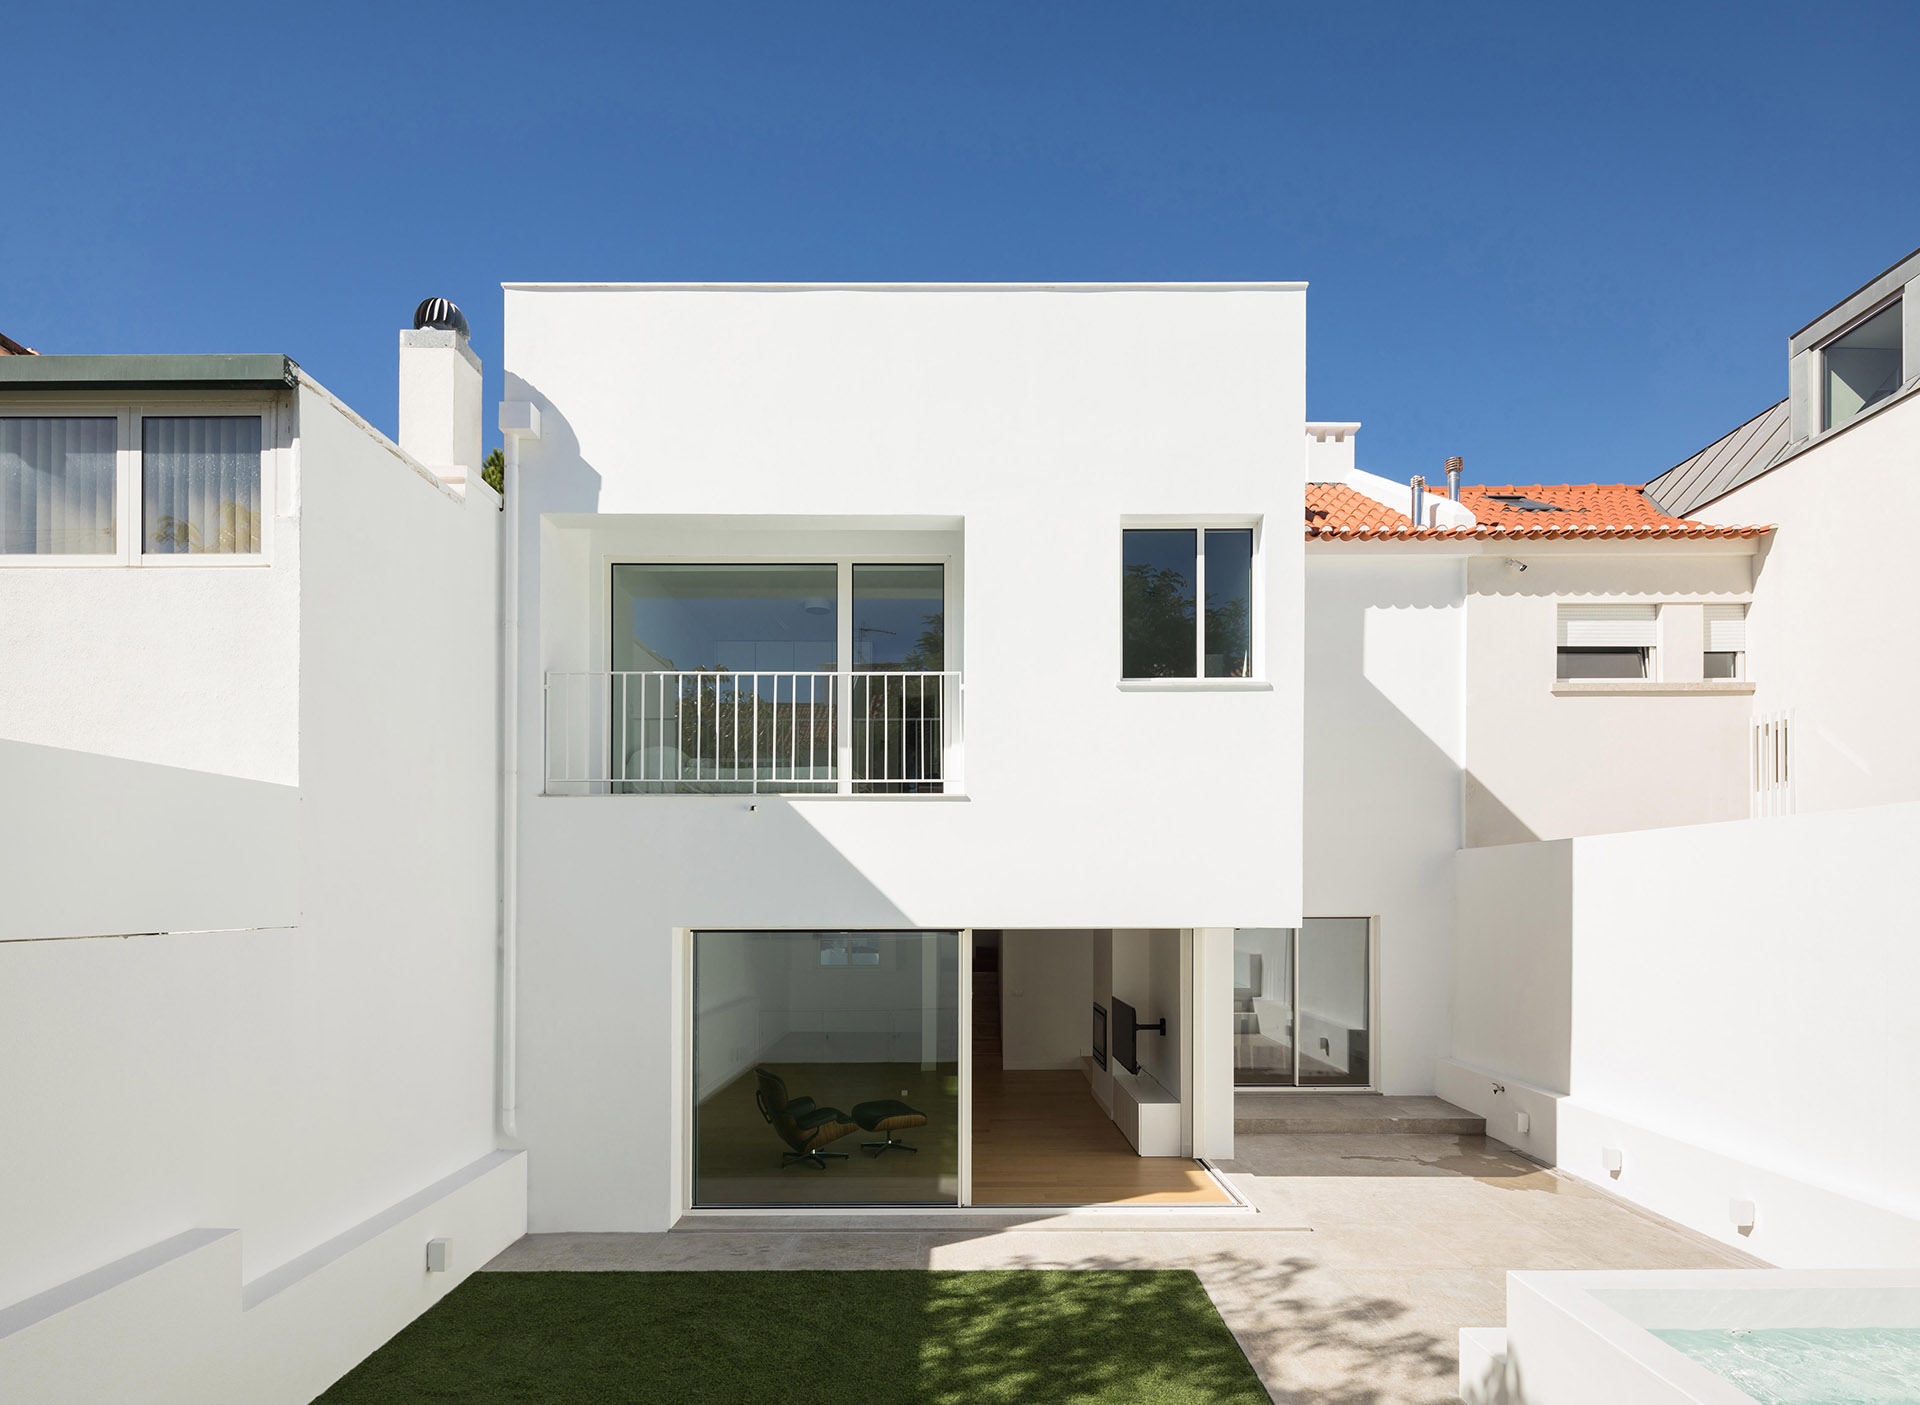 Lisbon House. Expansion, upgrading and optimization of the roof morphology